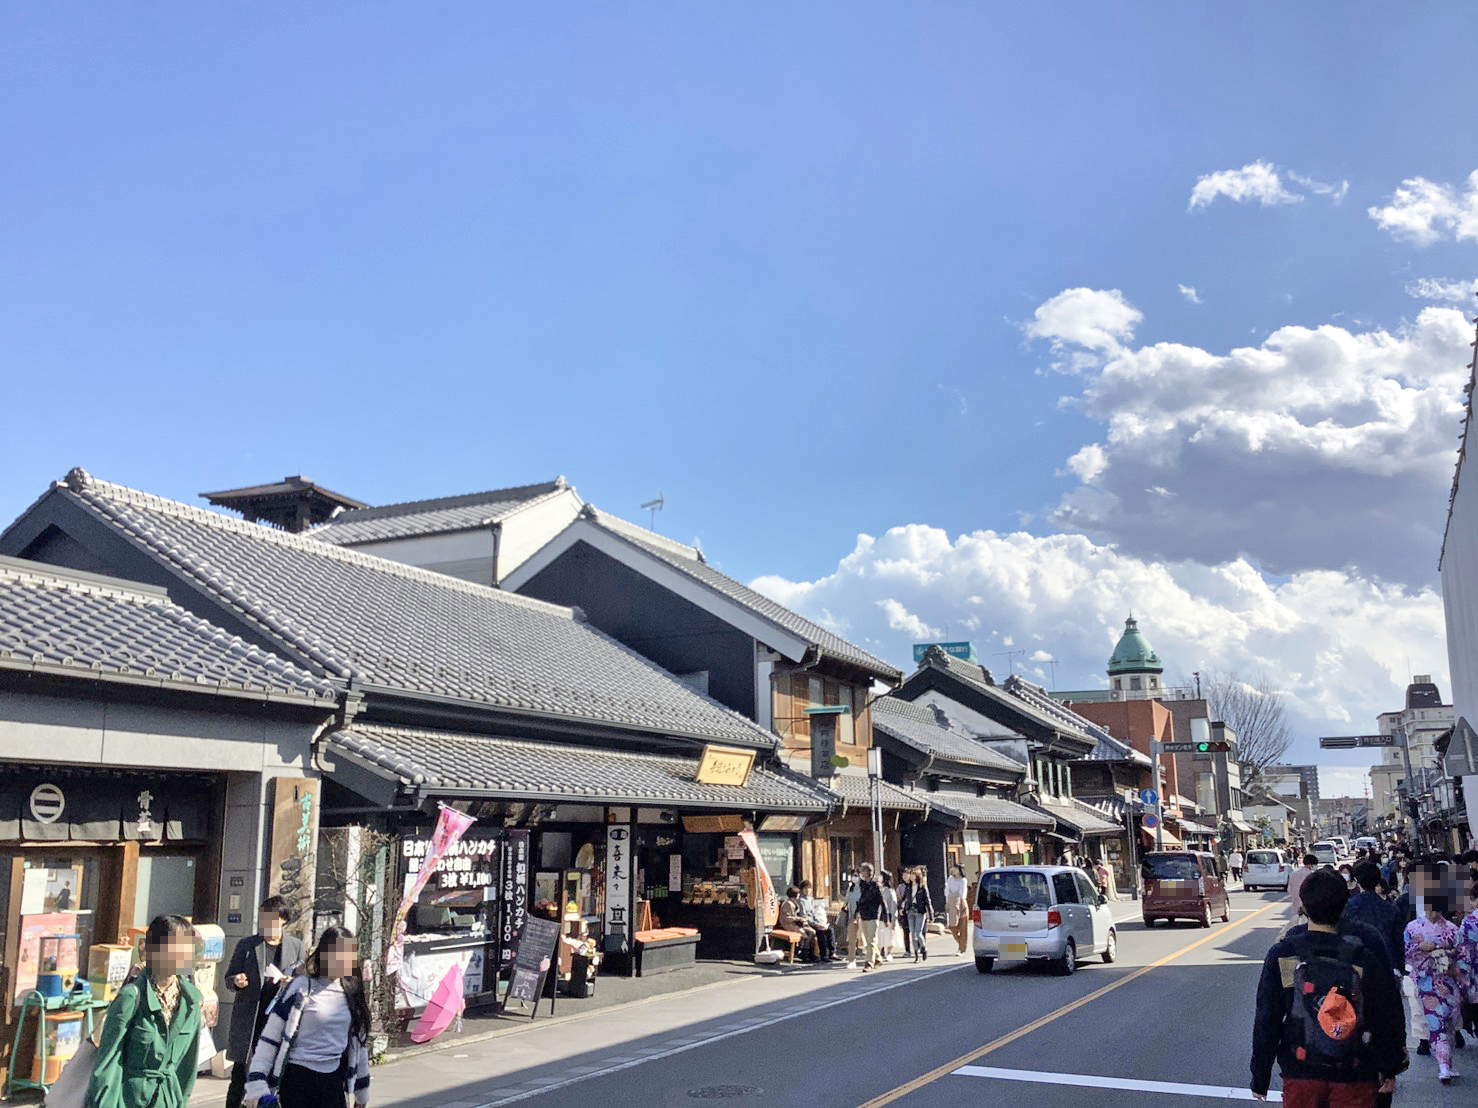 Streetscape of Kura zukuri